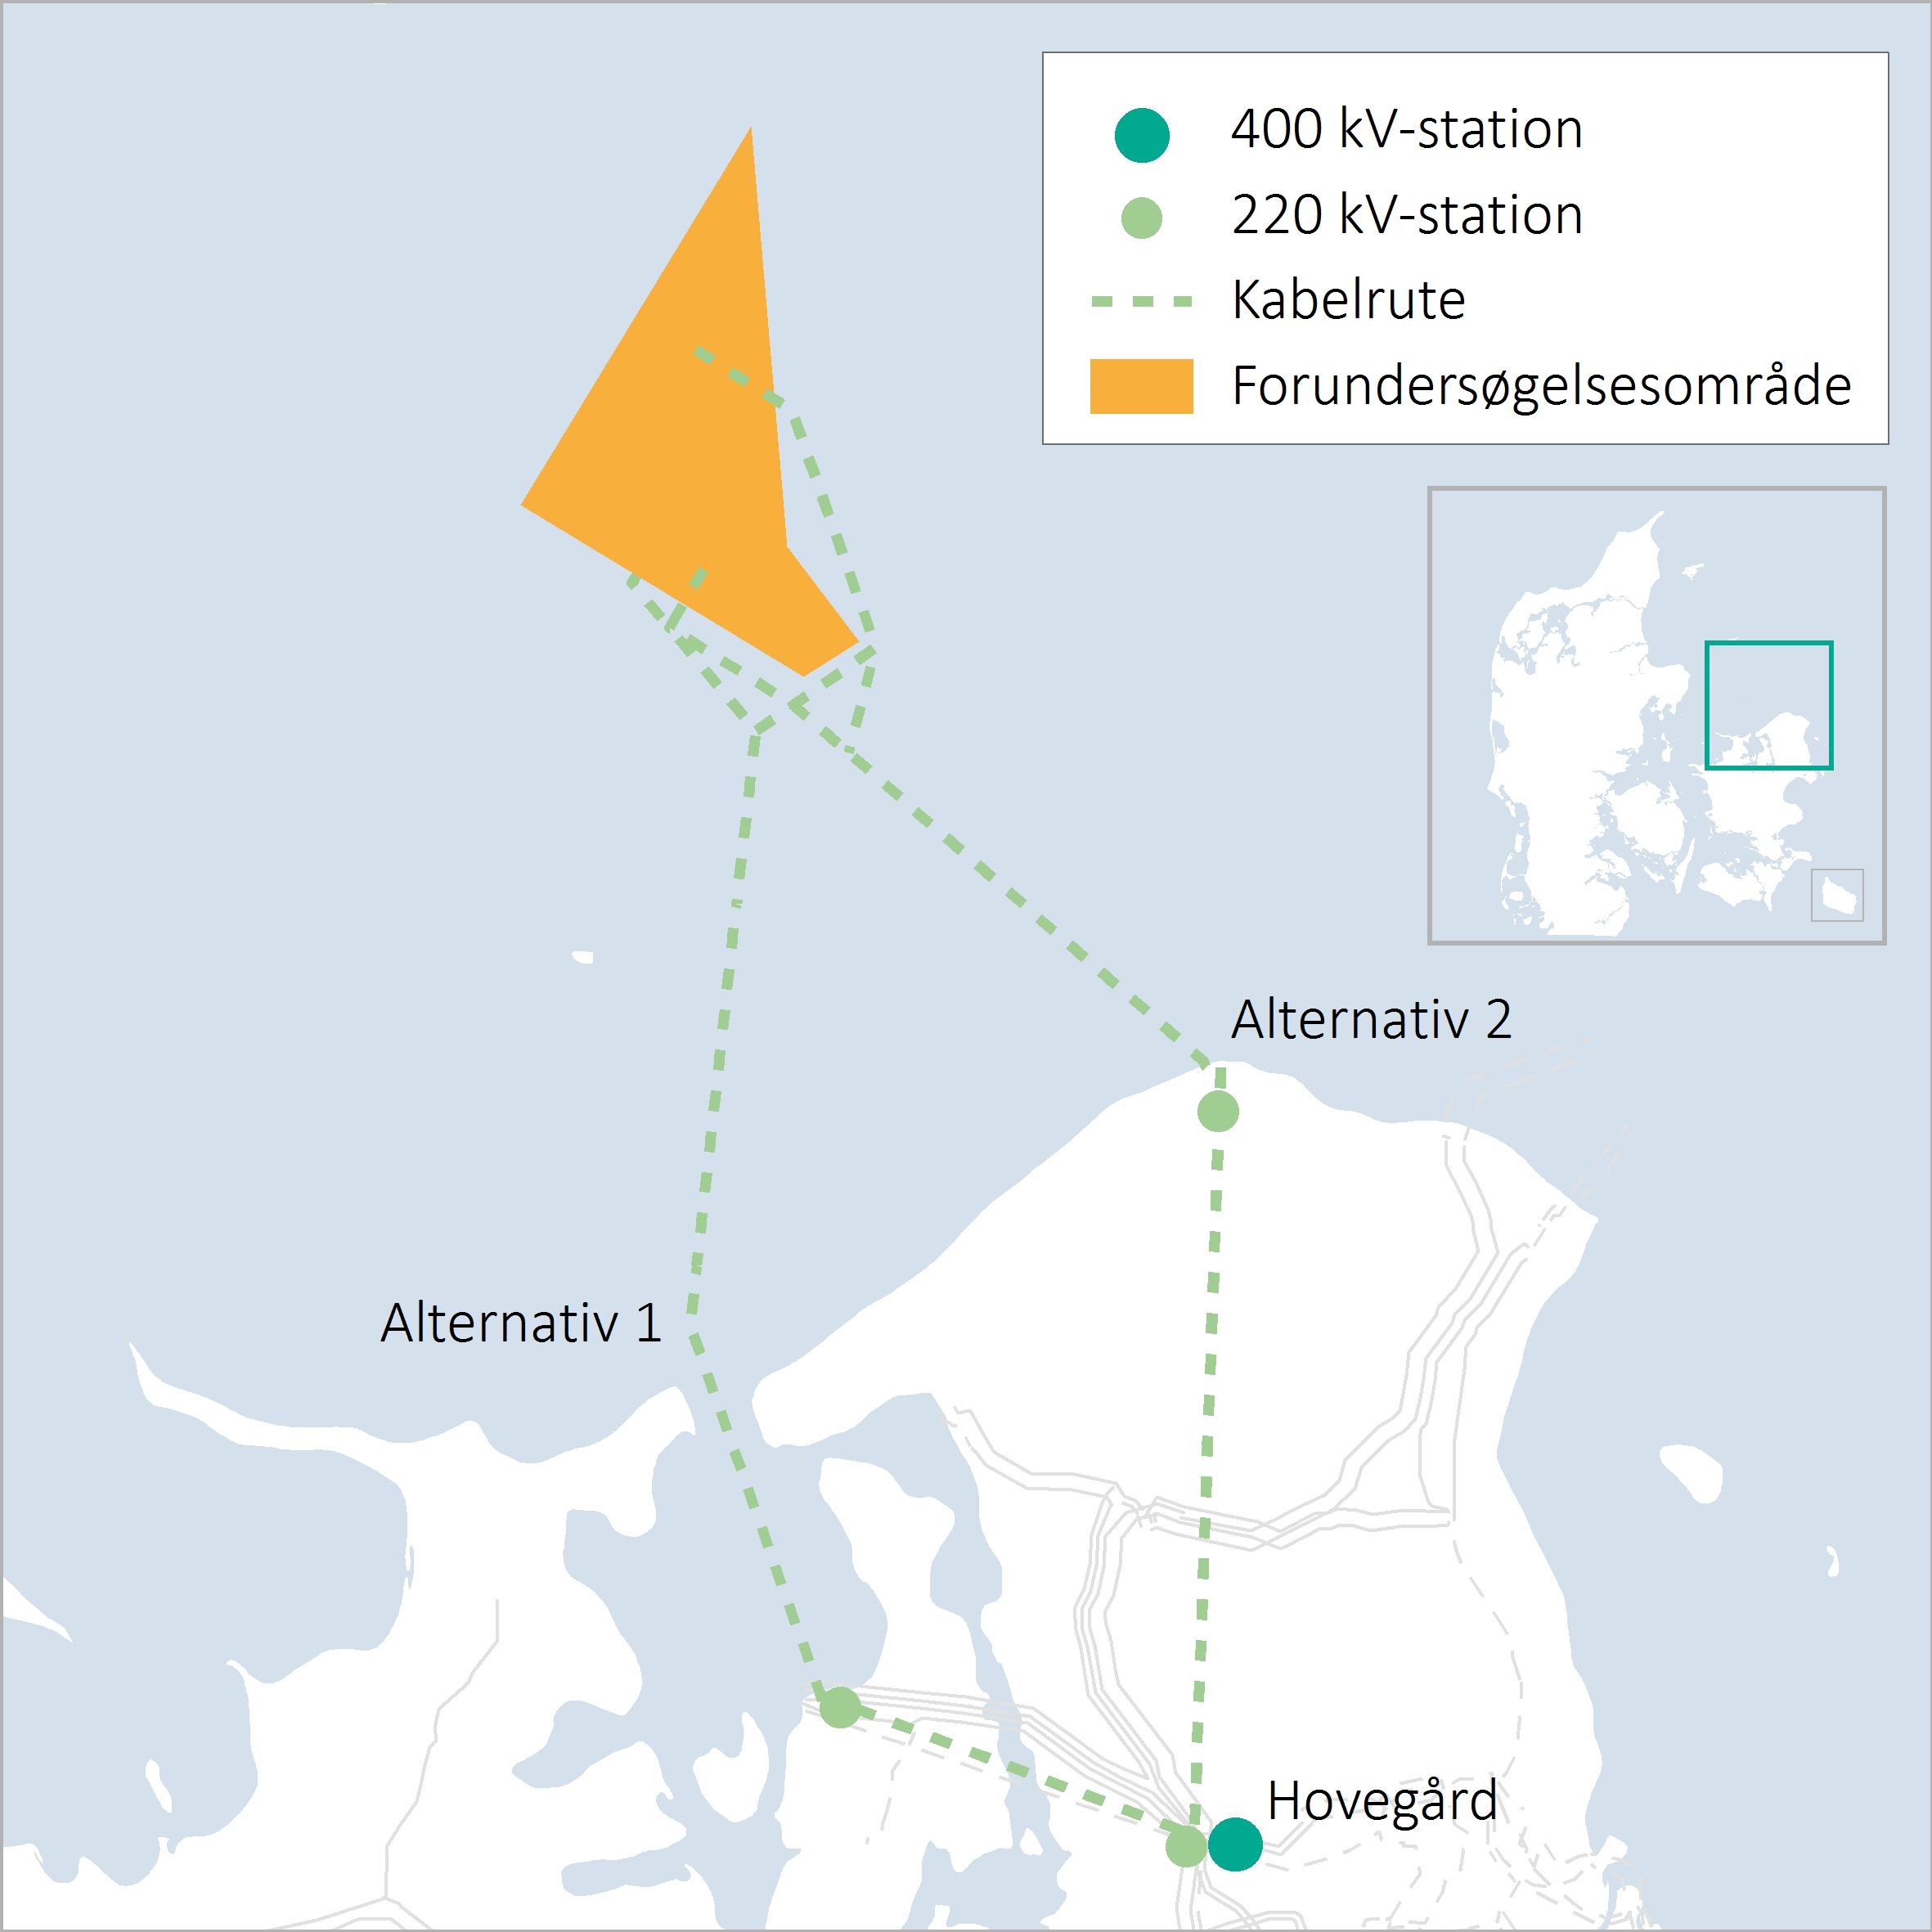 Gardline Joins Denmark's Largest Offshore Wind Project